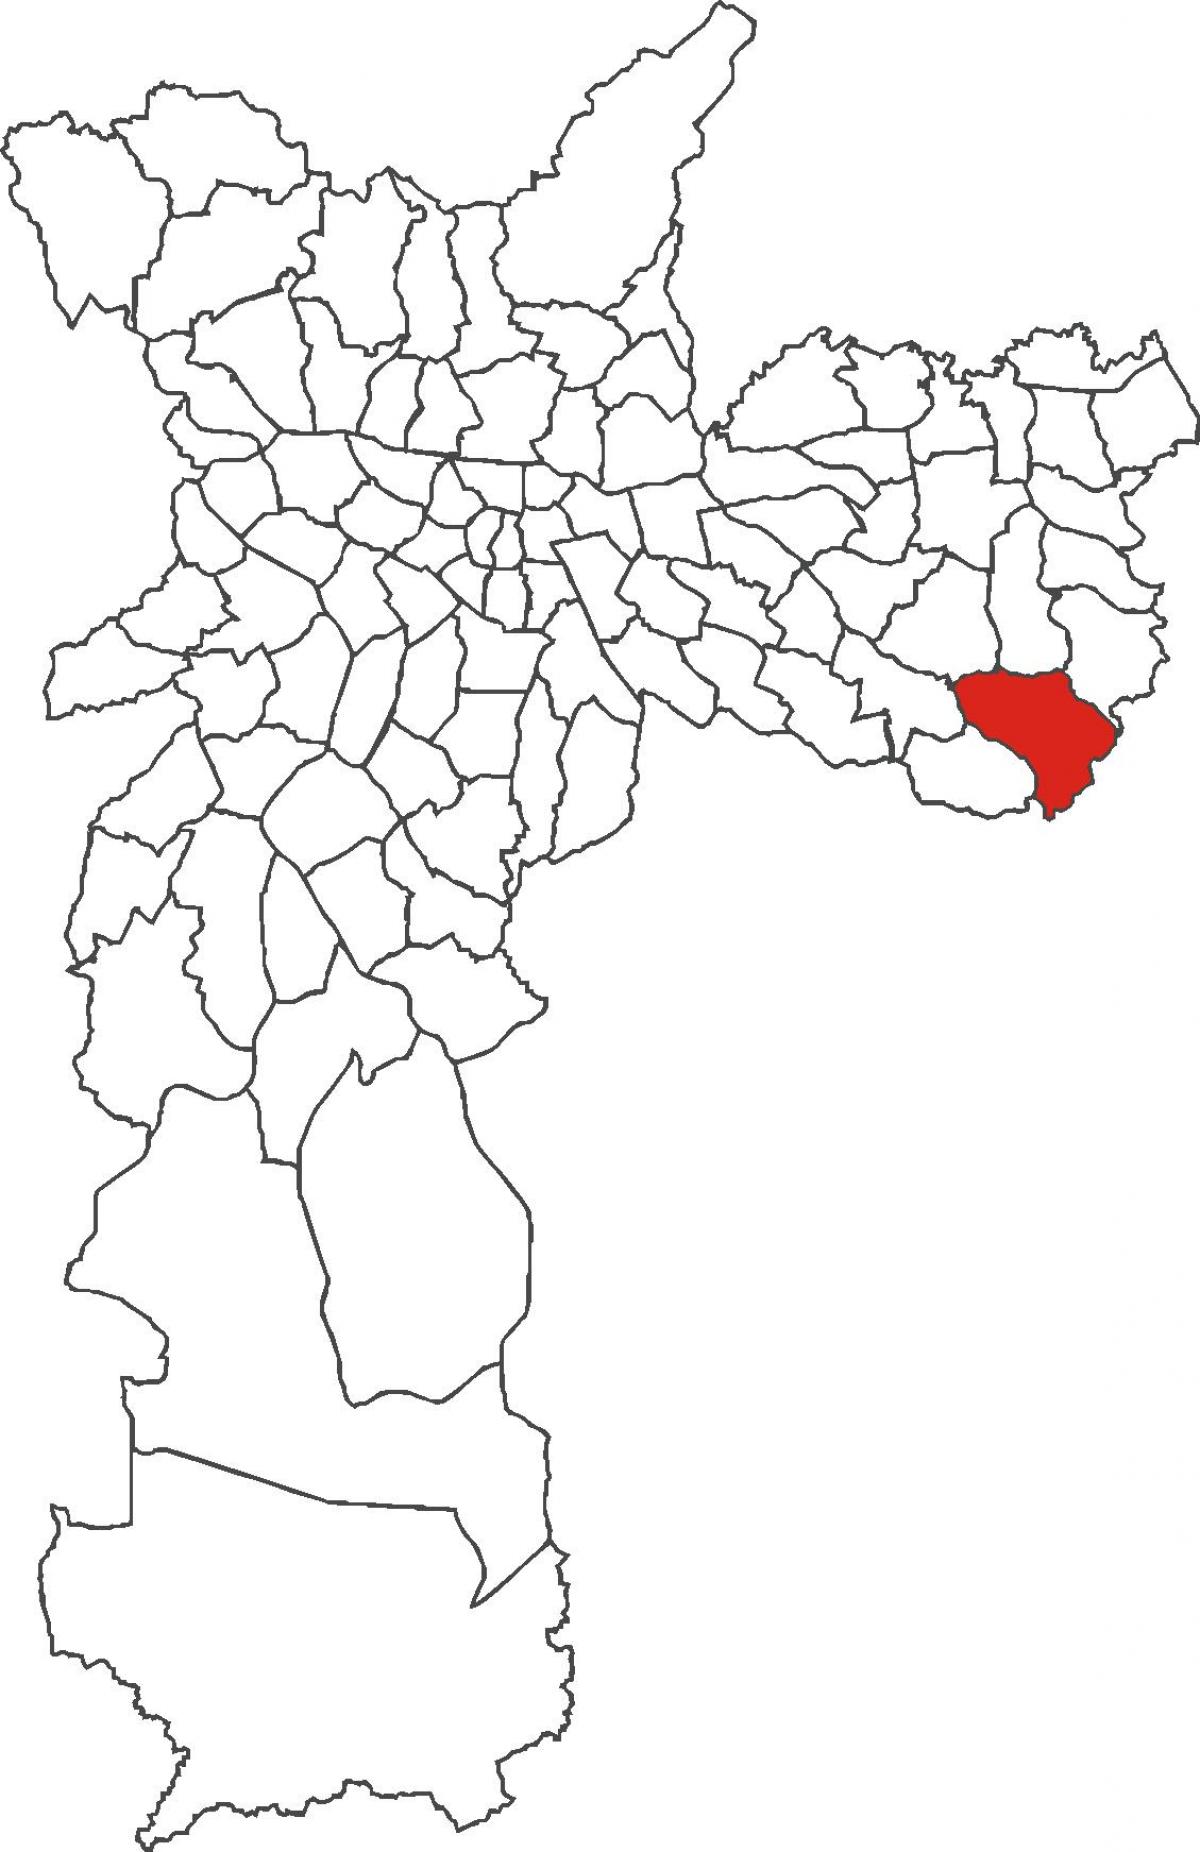 Karte Iguatemi rajons